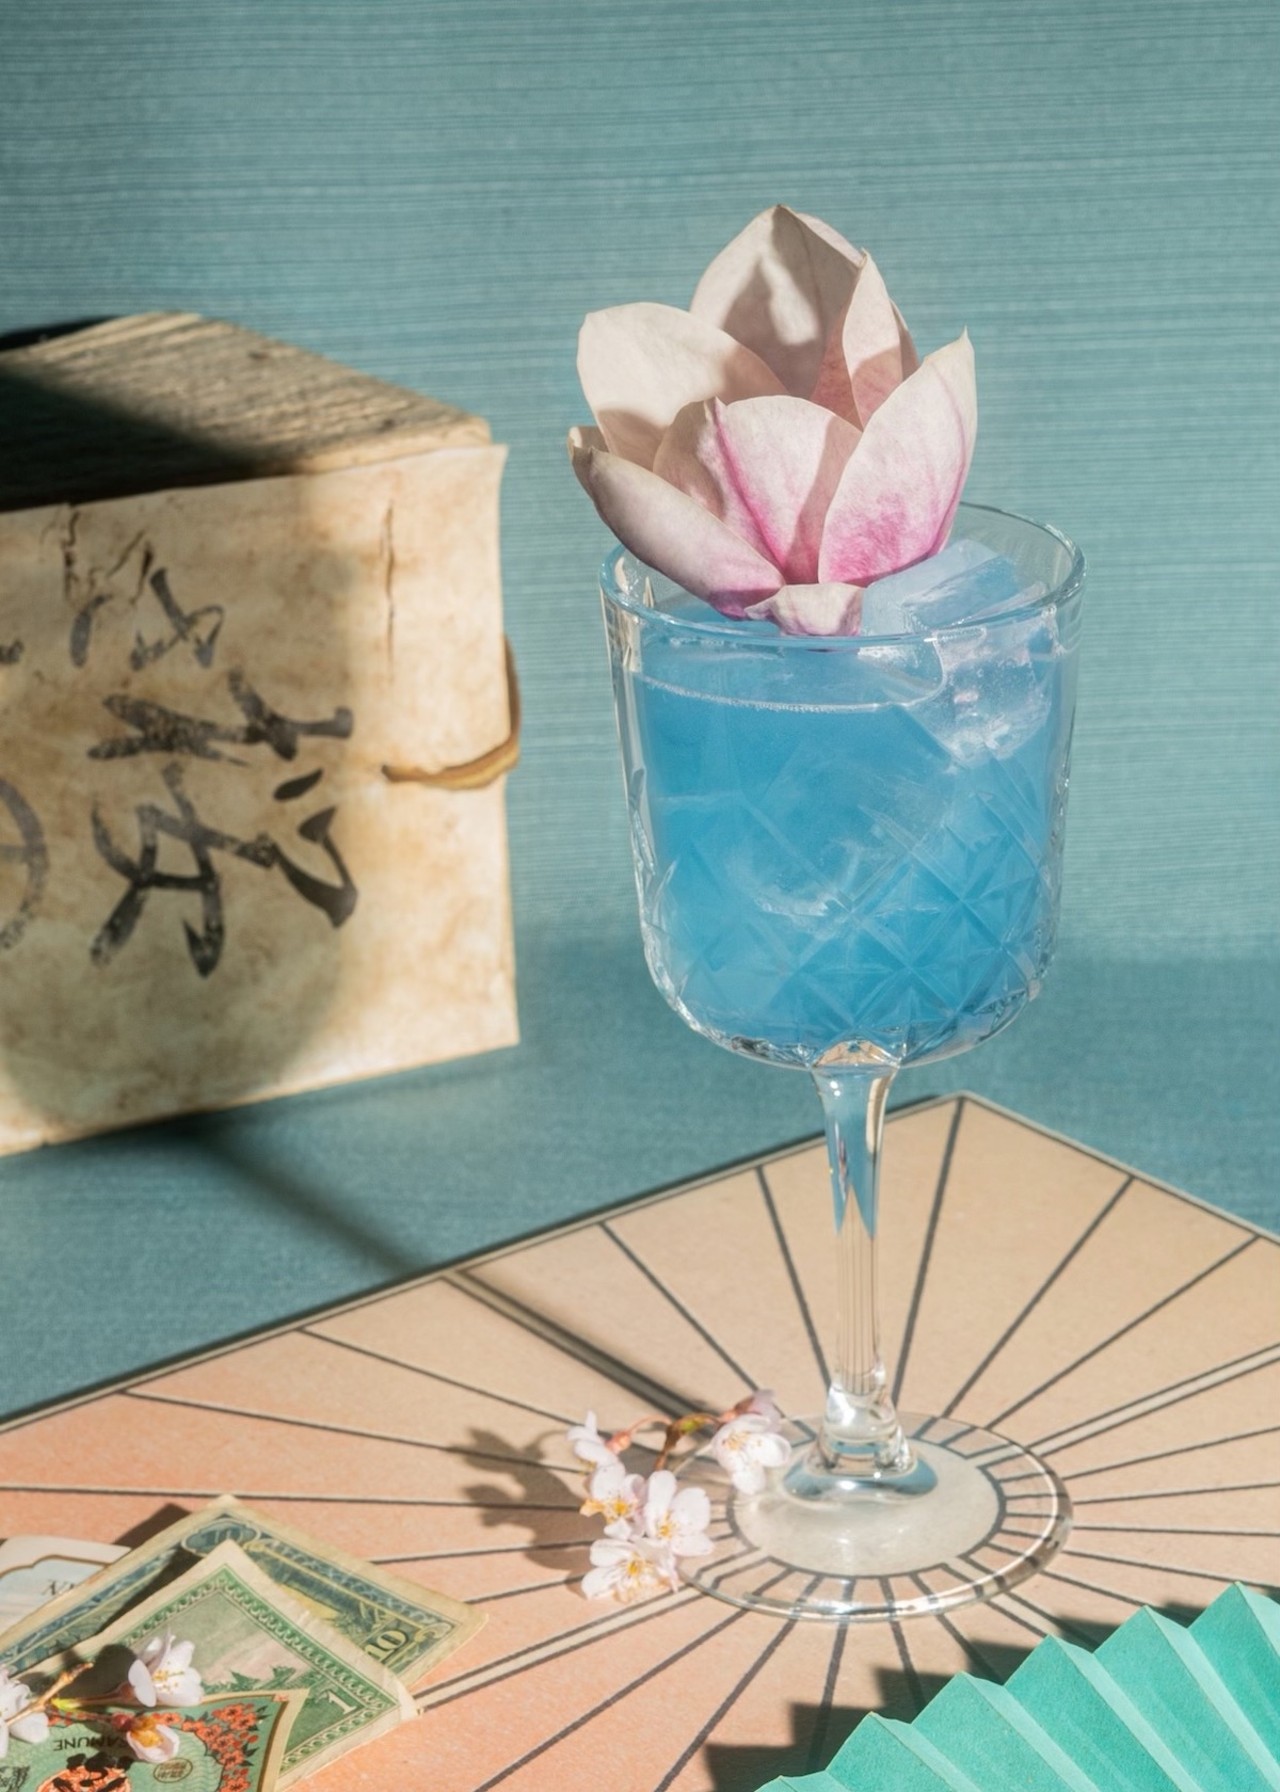 Sakura Spritz
What's in it: Butterfly pea tea-infused vodka, sake, sakura + blue spirulina syrup, lemon and electrolytes